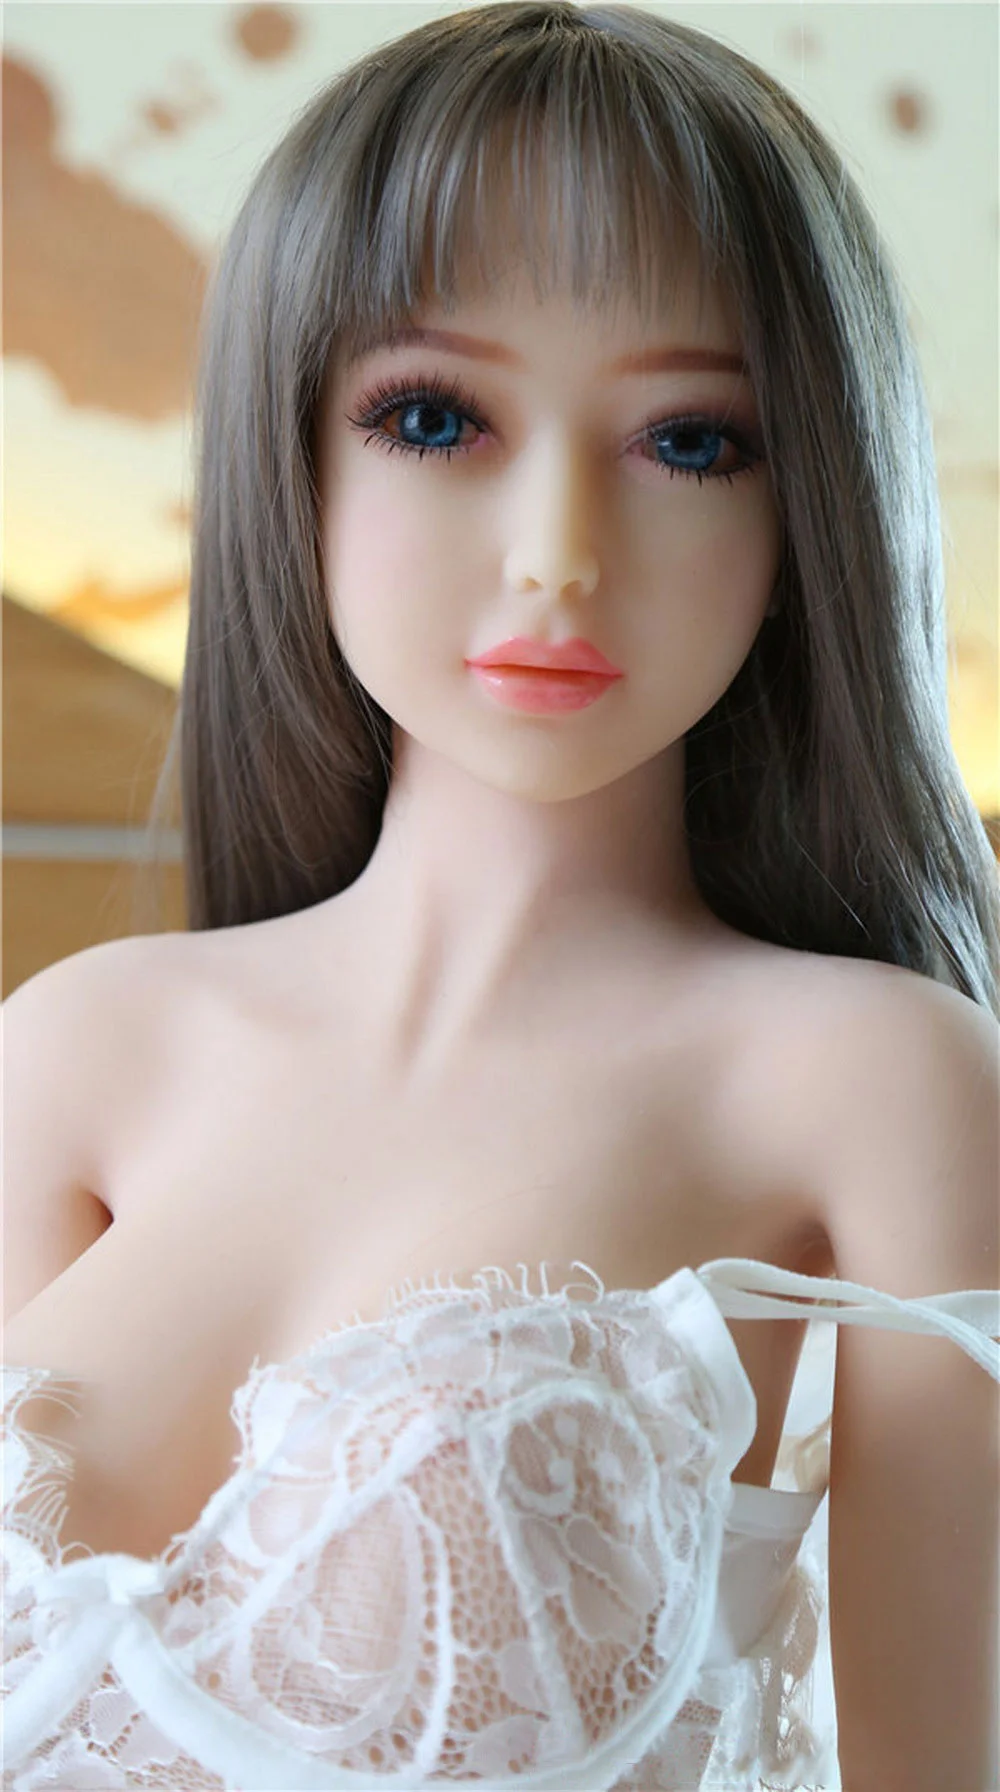 Mini sex doll in white lace clothes